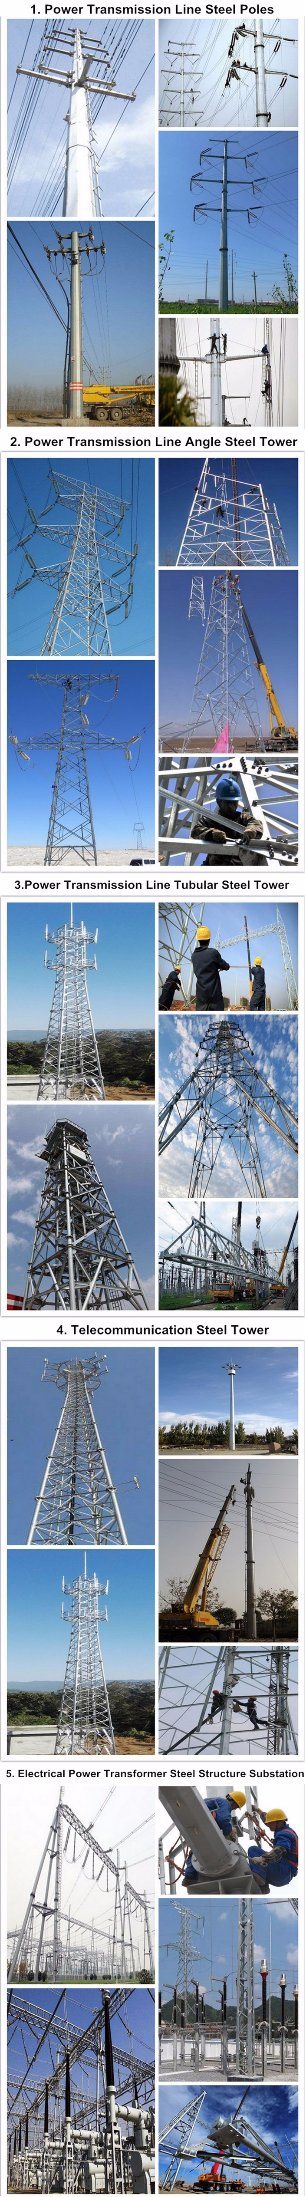 11m Tubular Mv Steel Antenna Telecommunication Communication Monopole Tower / Pole